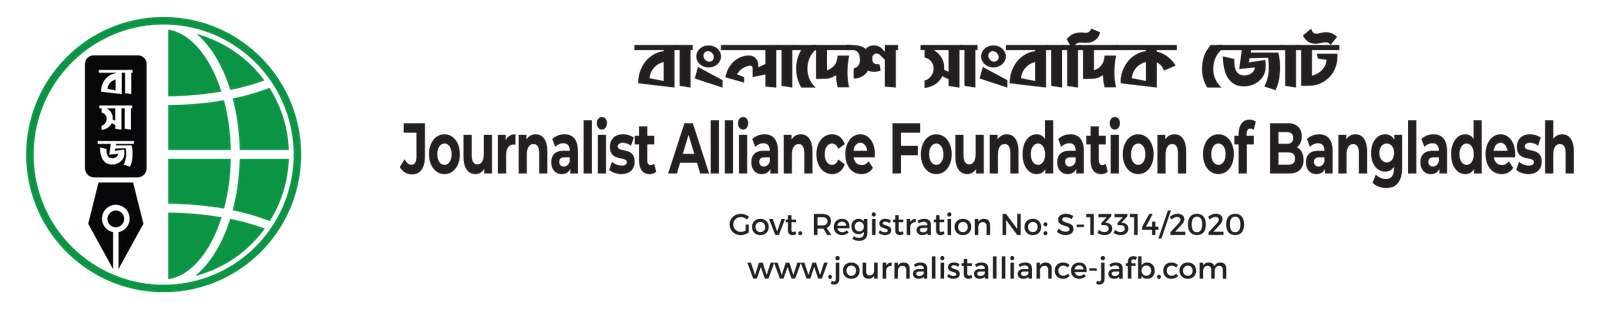 Journalist Alliance Foundation of Bangladesh